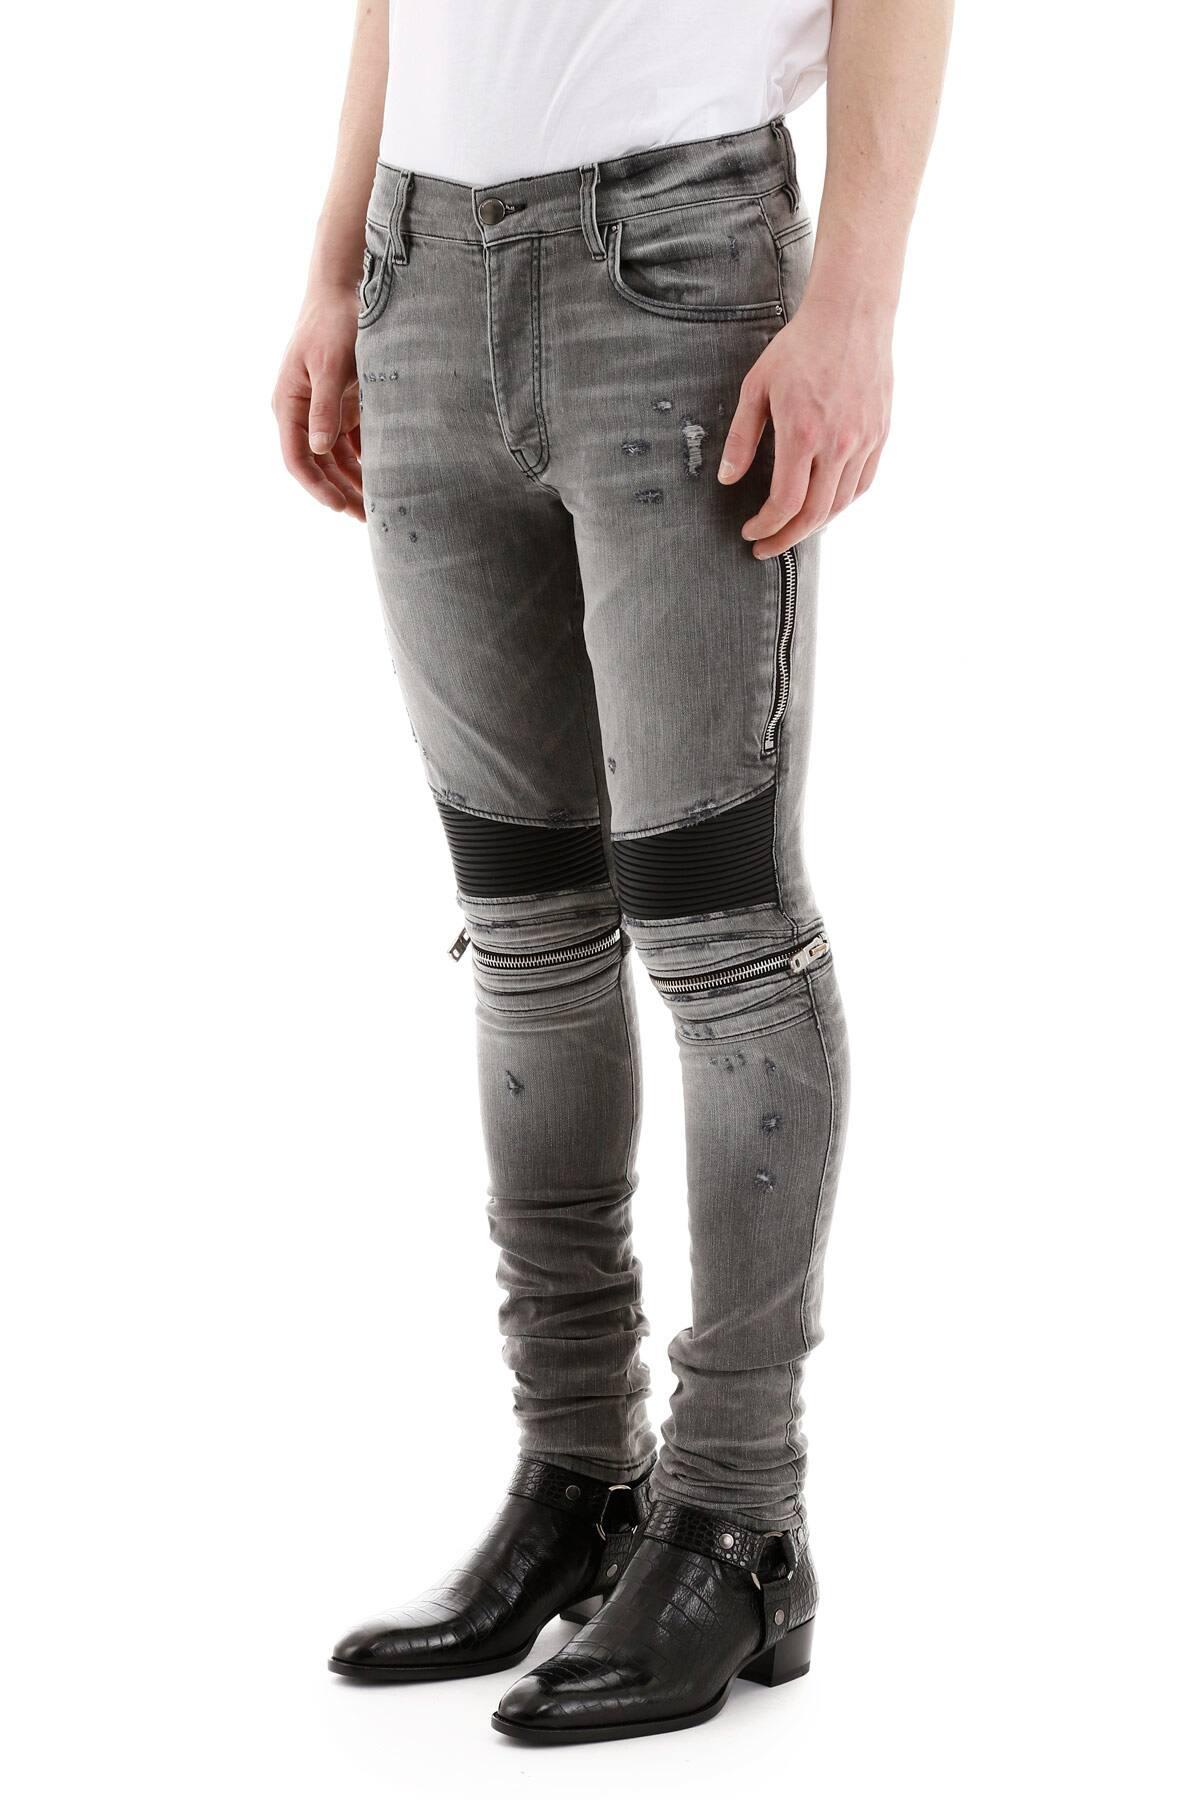 Amiri Denim Slim Fit Biker Jeans in Grey,Black (Gray) for Men - Lyst